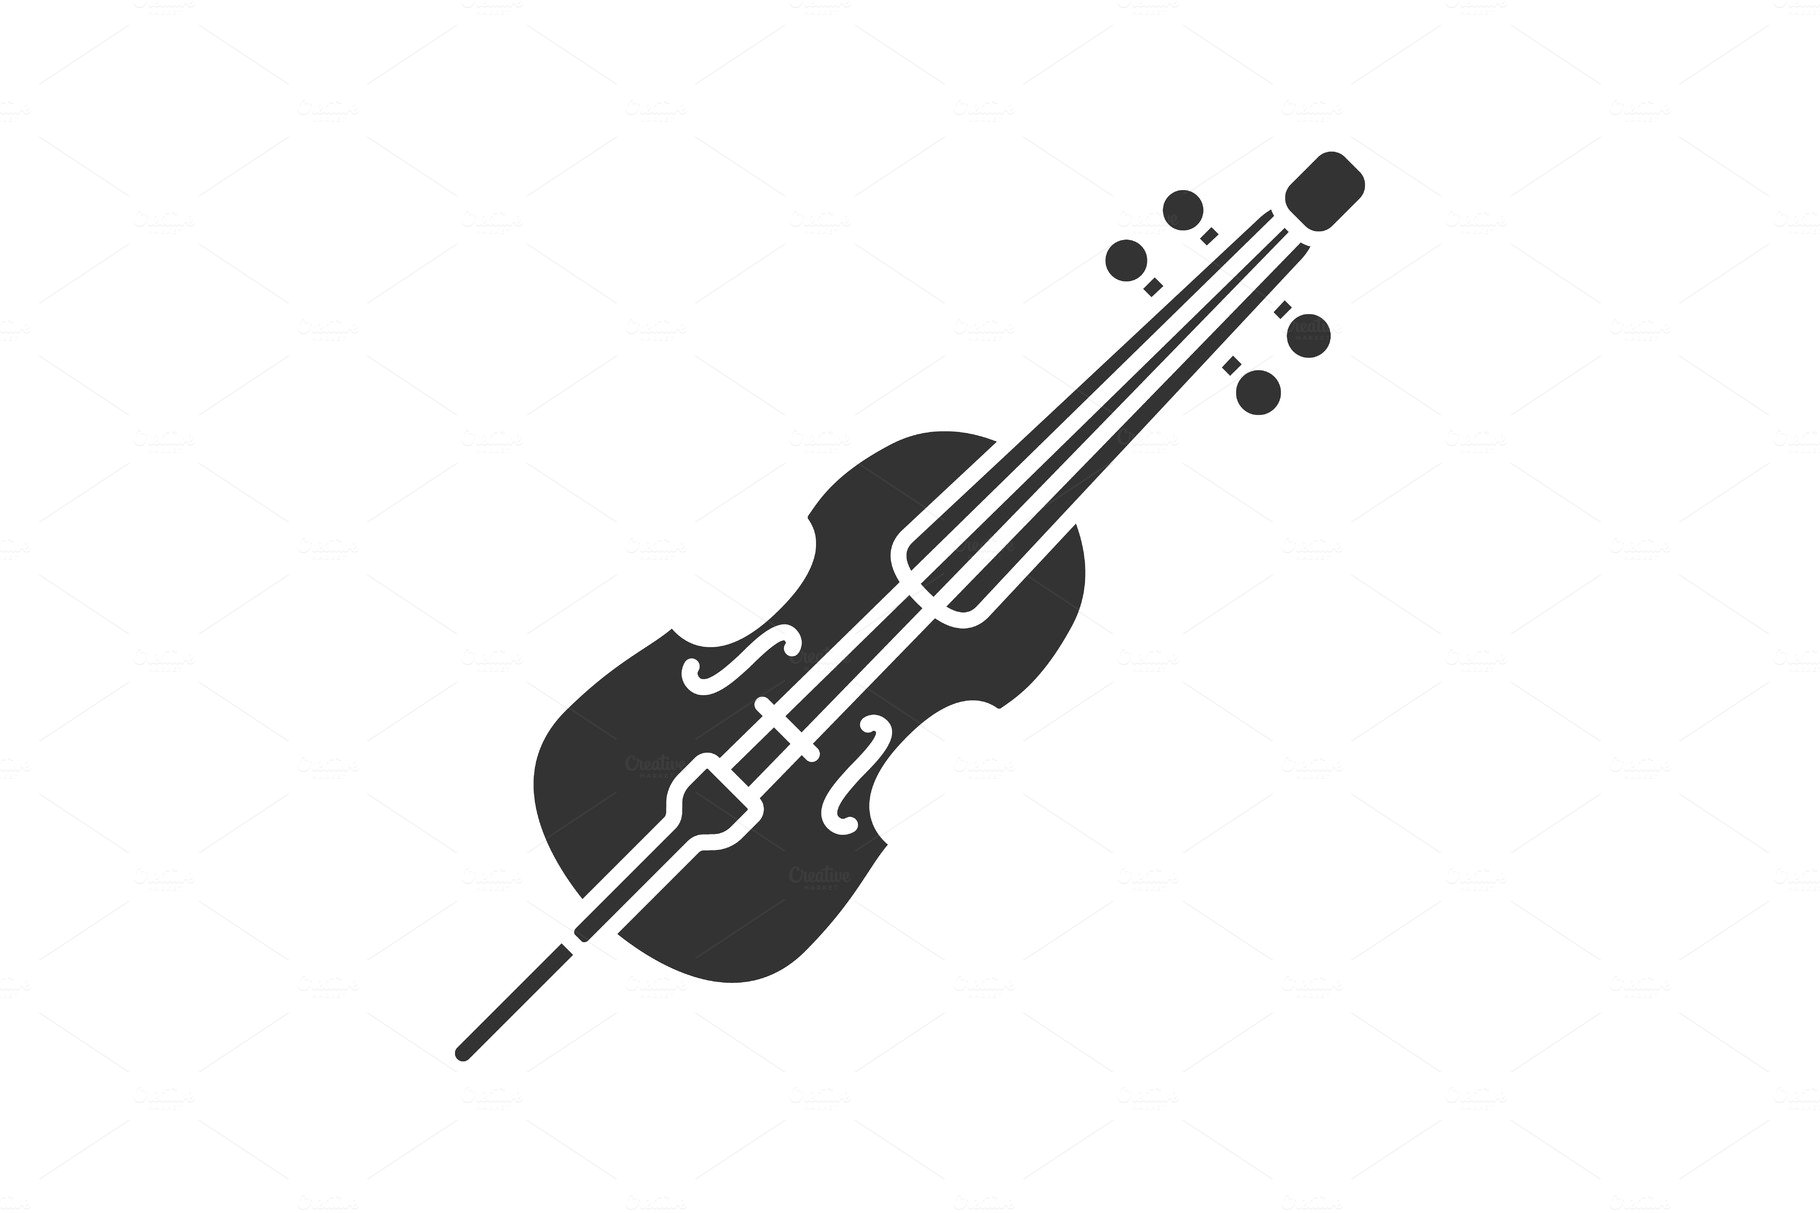 Cello glyph icon cover image.